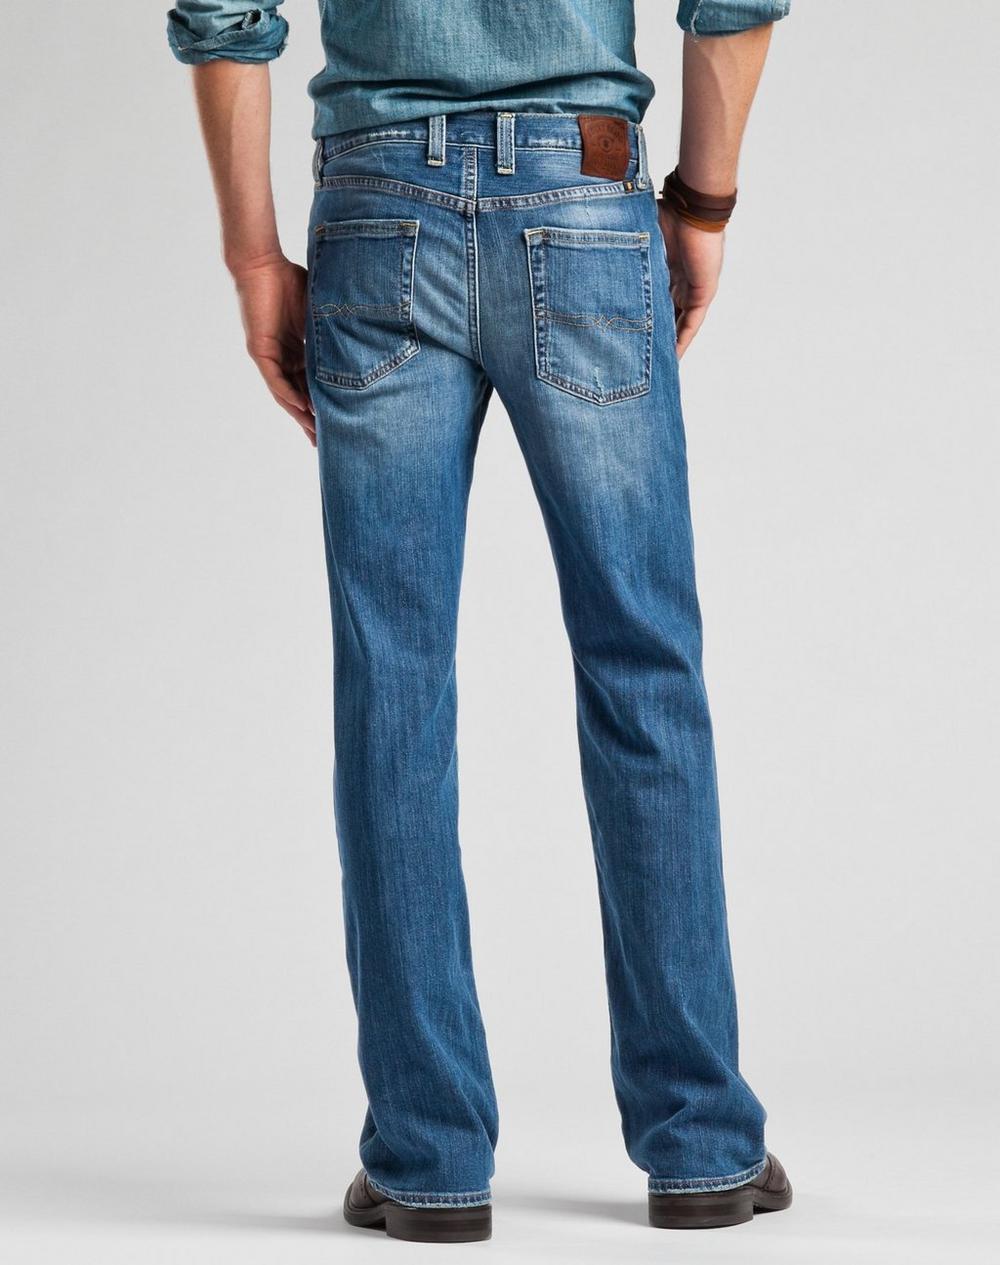 Lucky Brand Mens jeans darker 361 Vintage straight  7M119921MG/420 